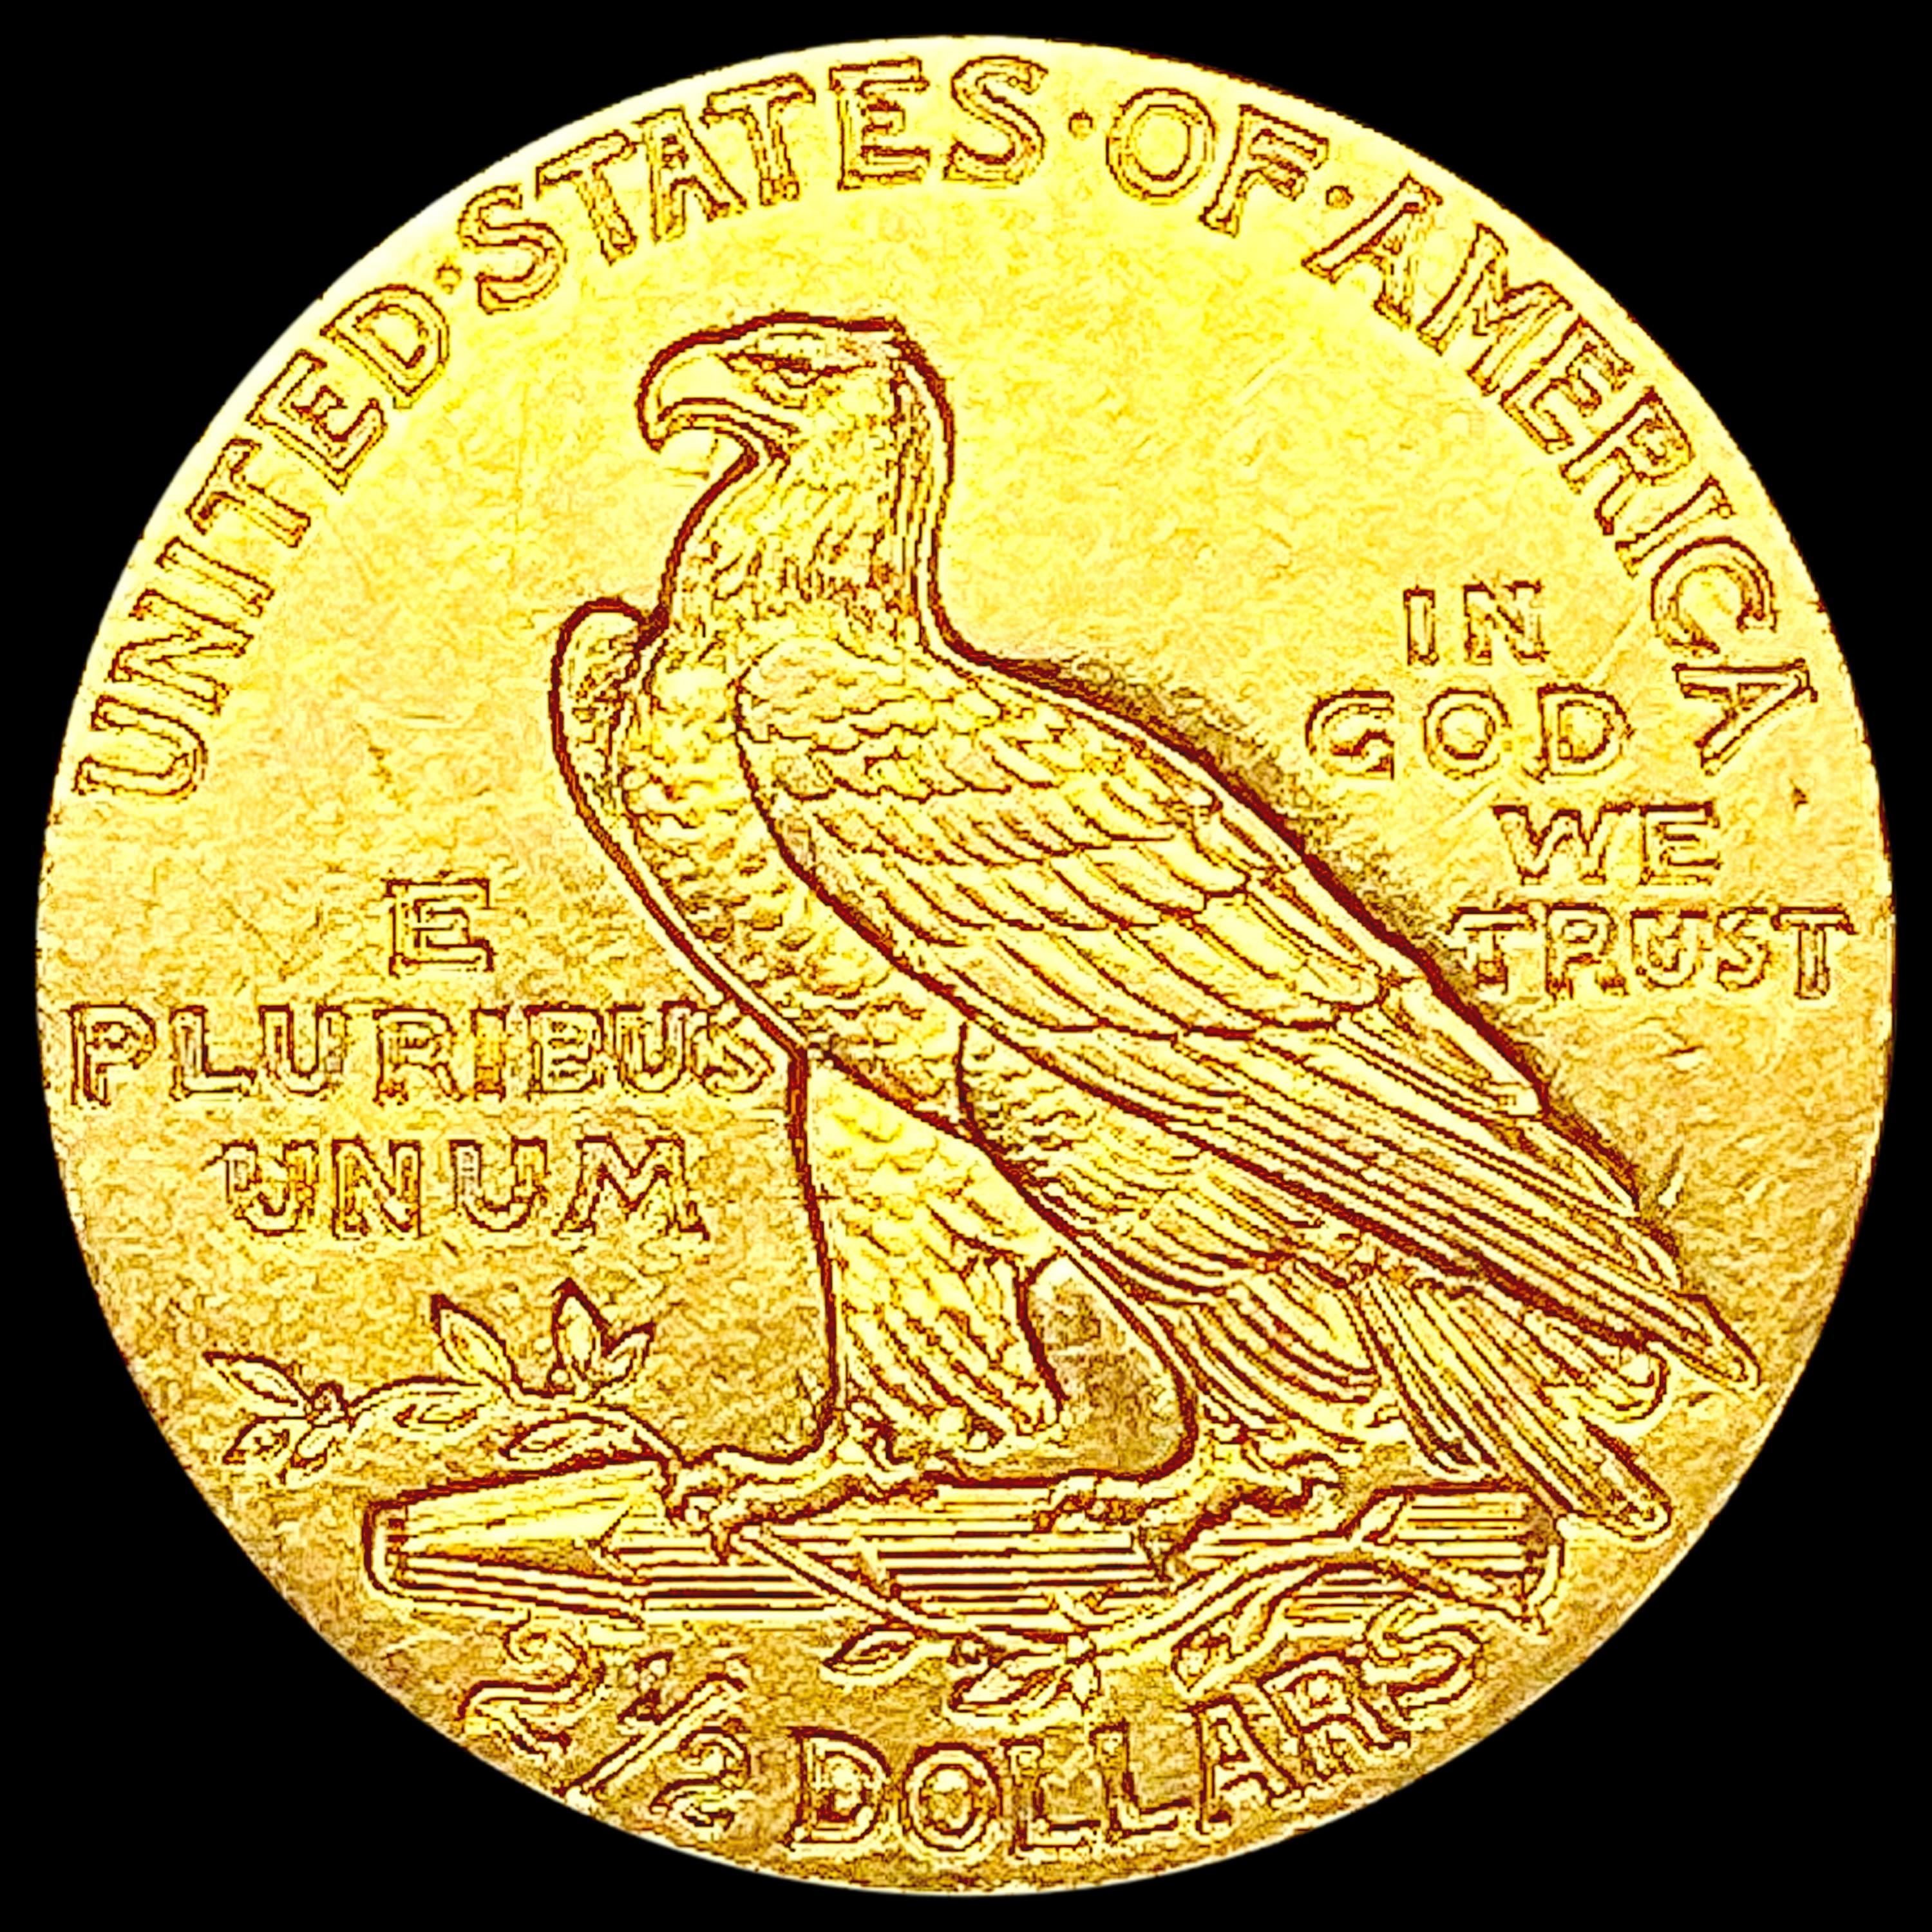 1911 $2.50 Gold Quarter Eagle UNCIRCULATED